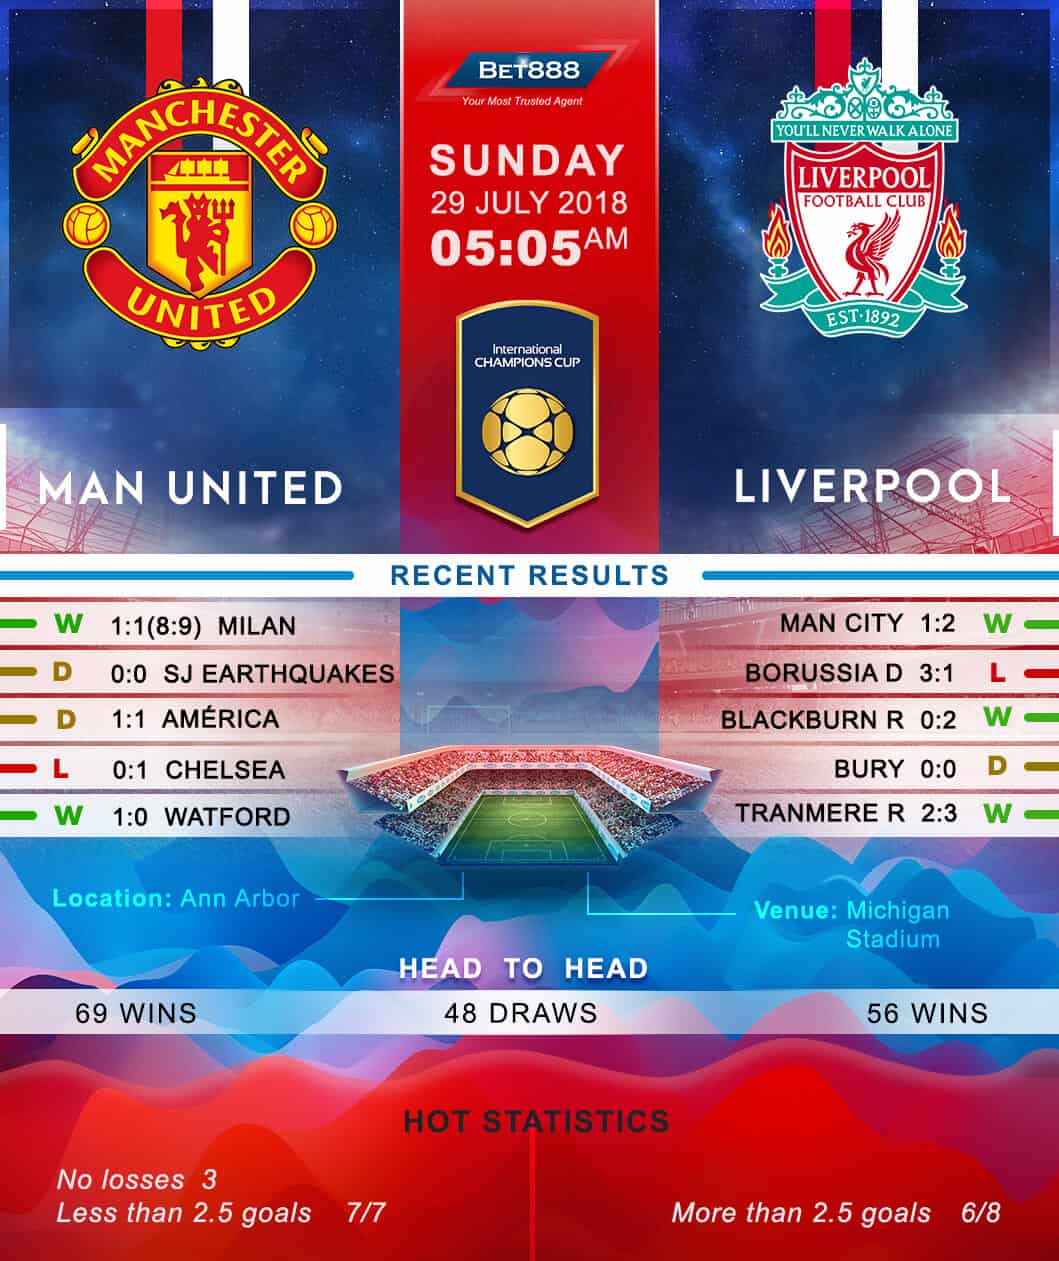 Manchester United vs Liverpool 29/07/18